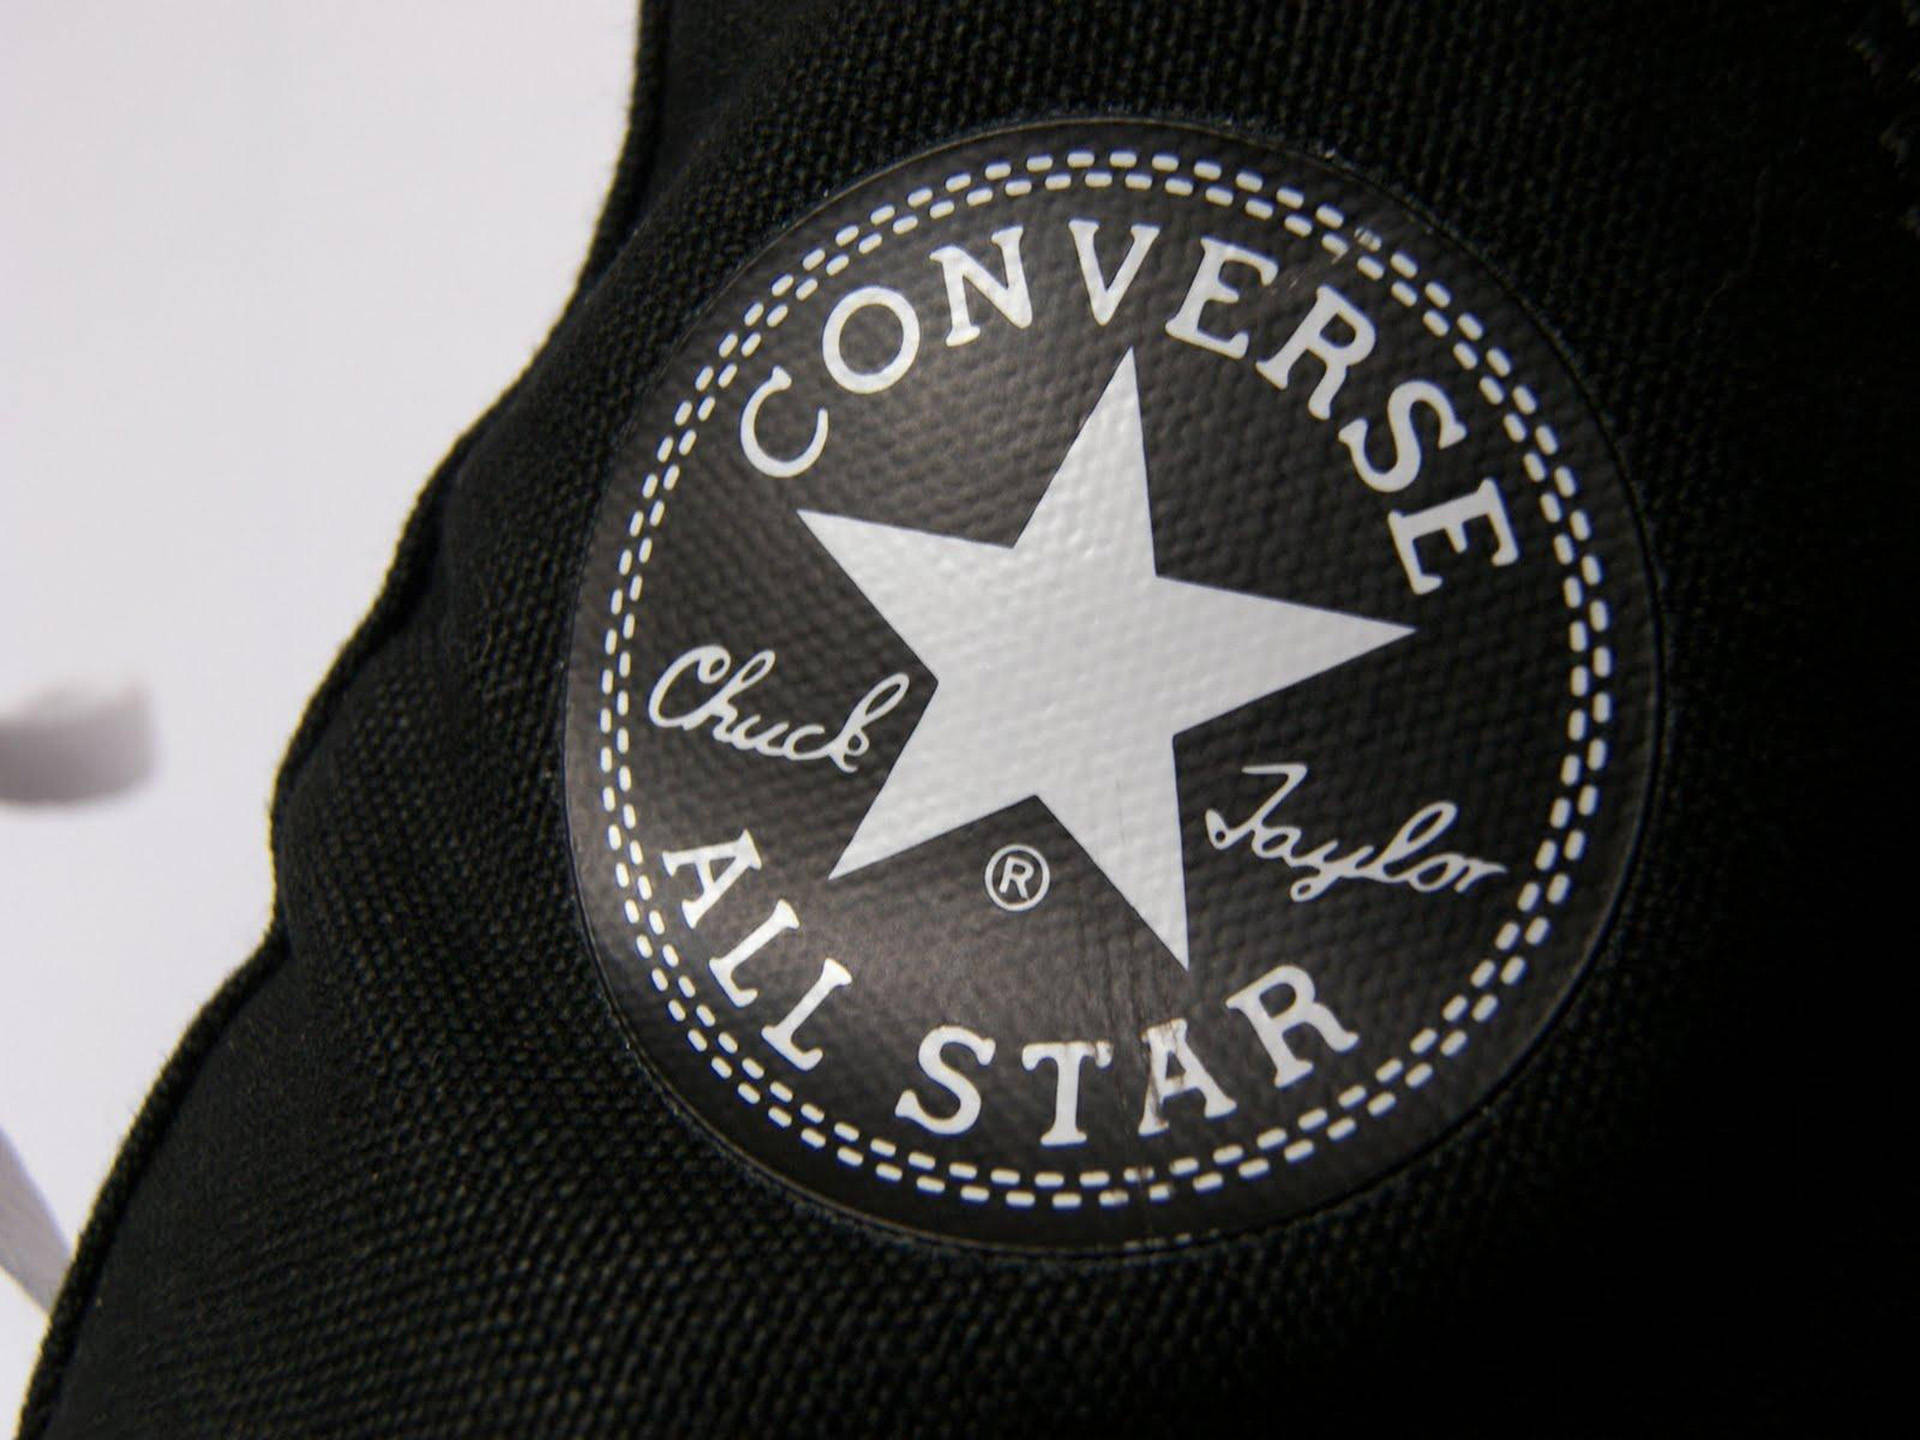 Glanzvollesall-star Converse-logo Wallpaper